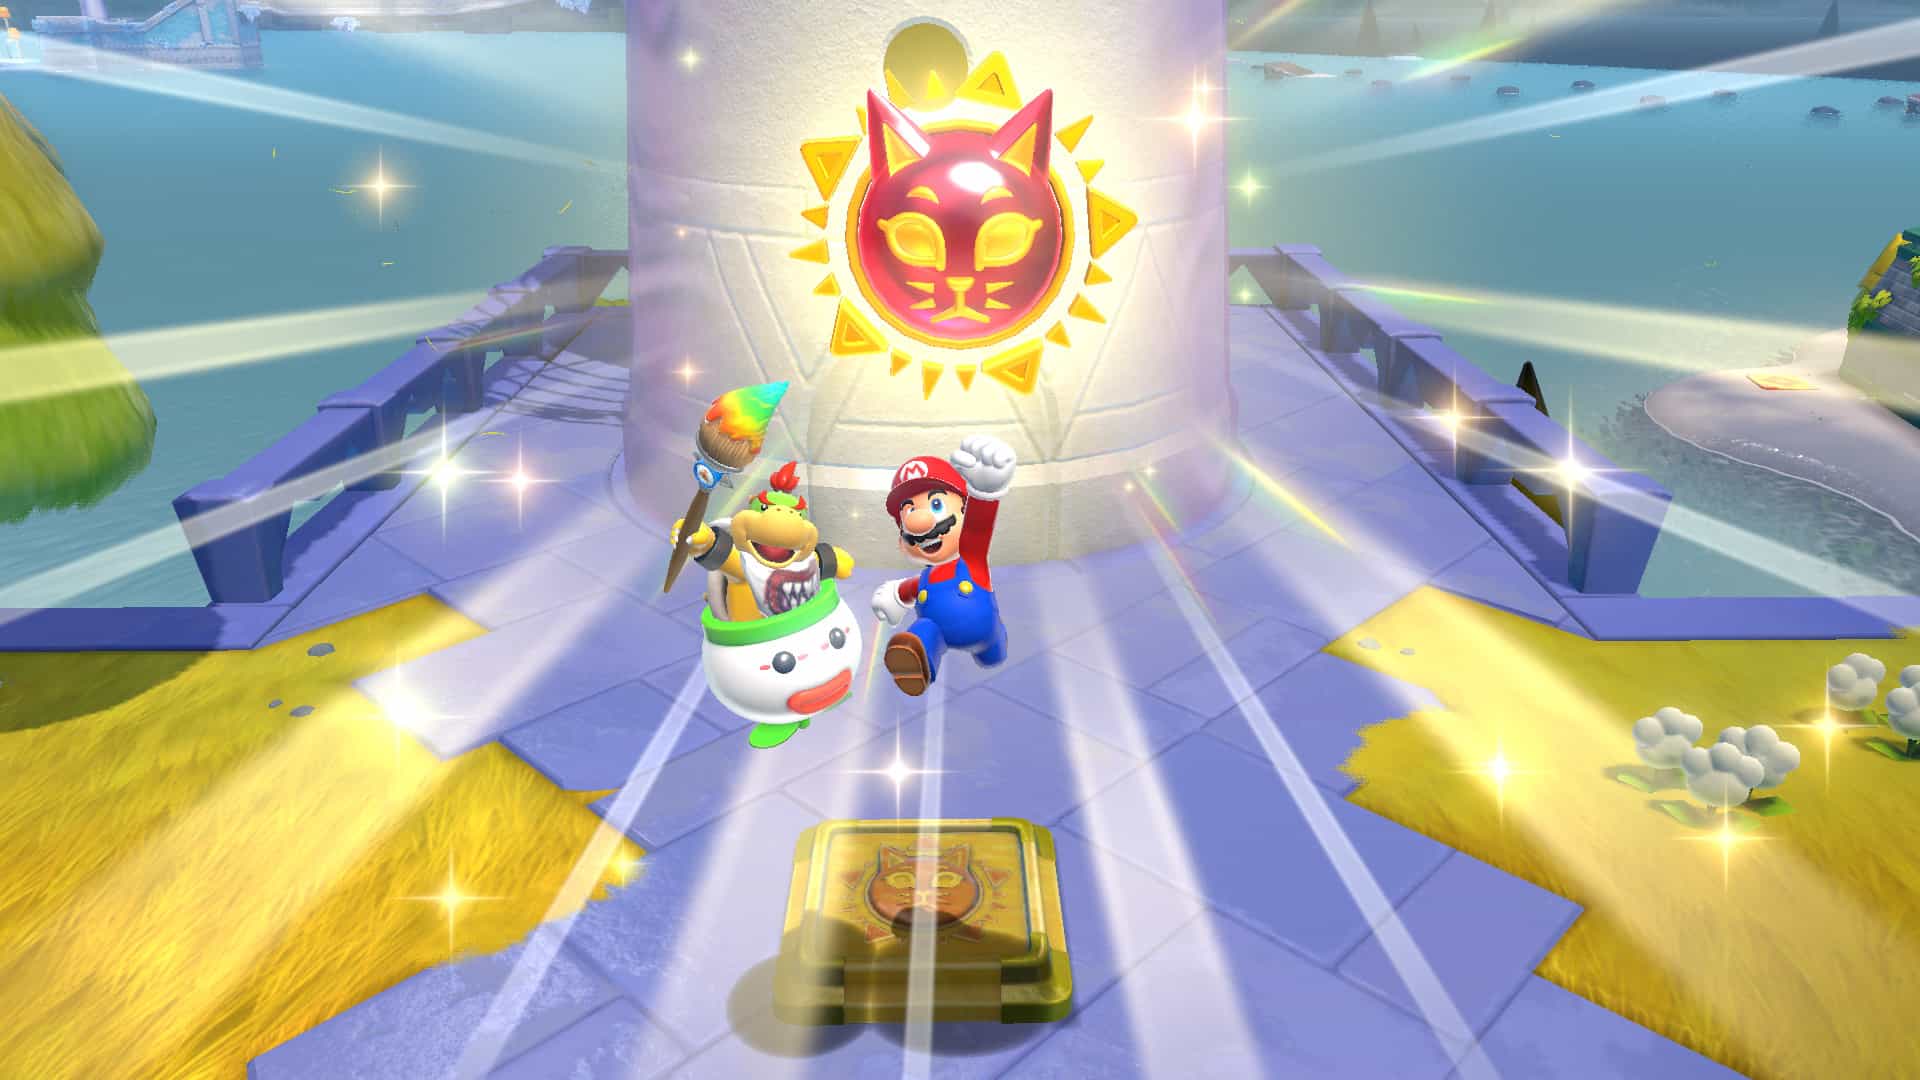 Nintendo Switch Super Mario 3D World + Bowser's Fury